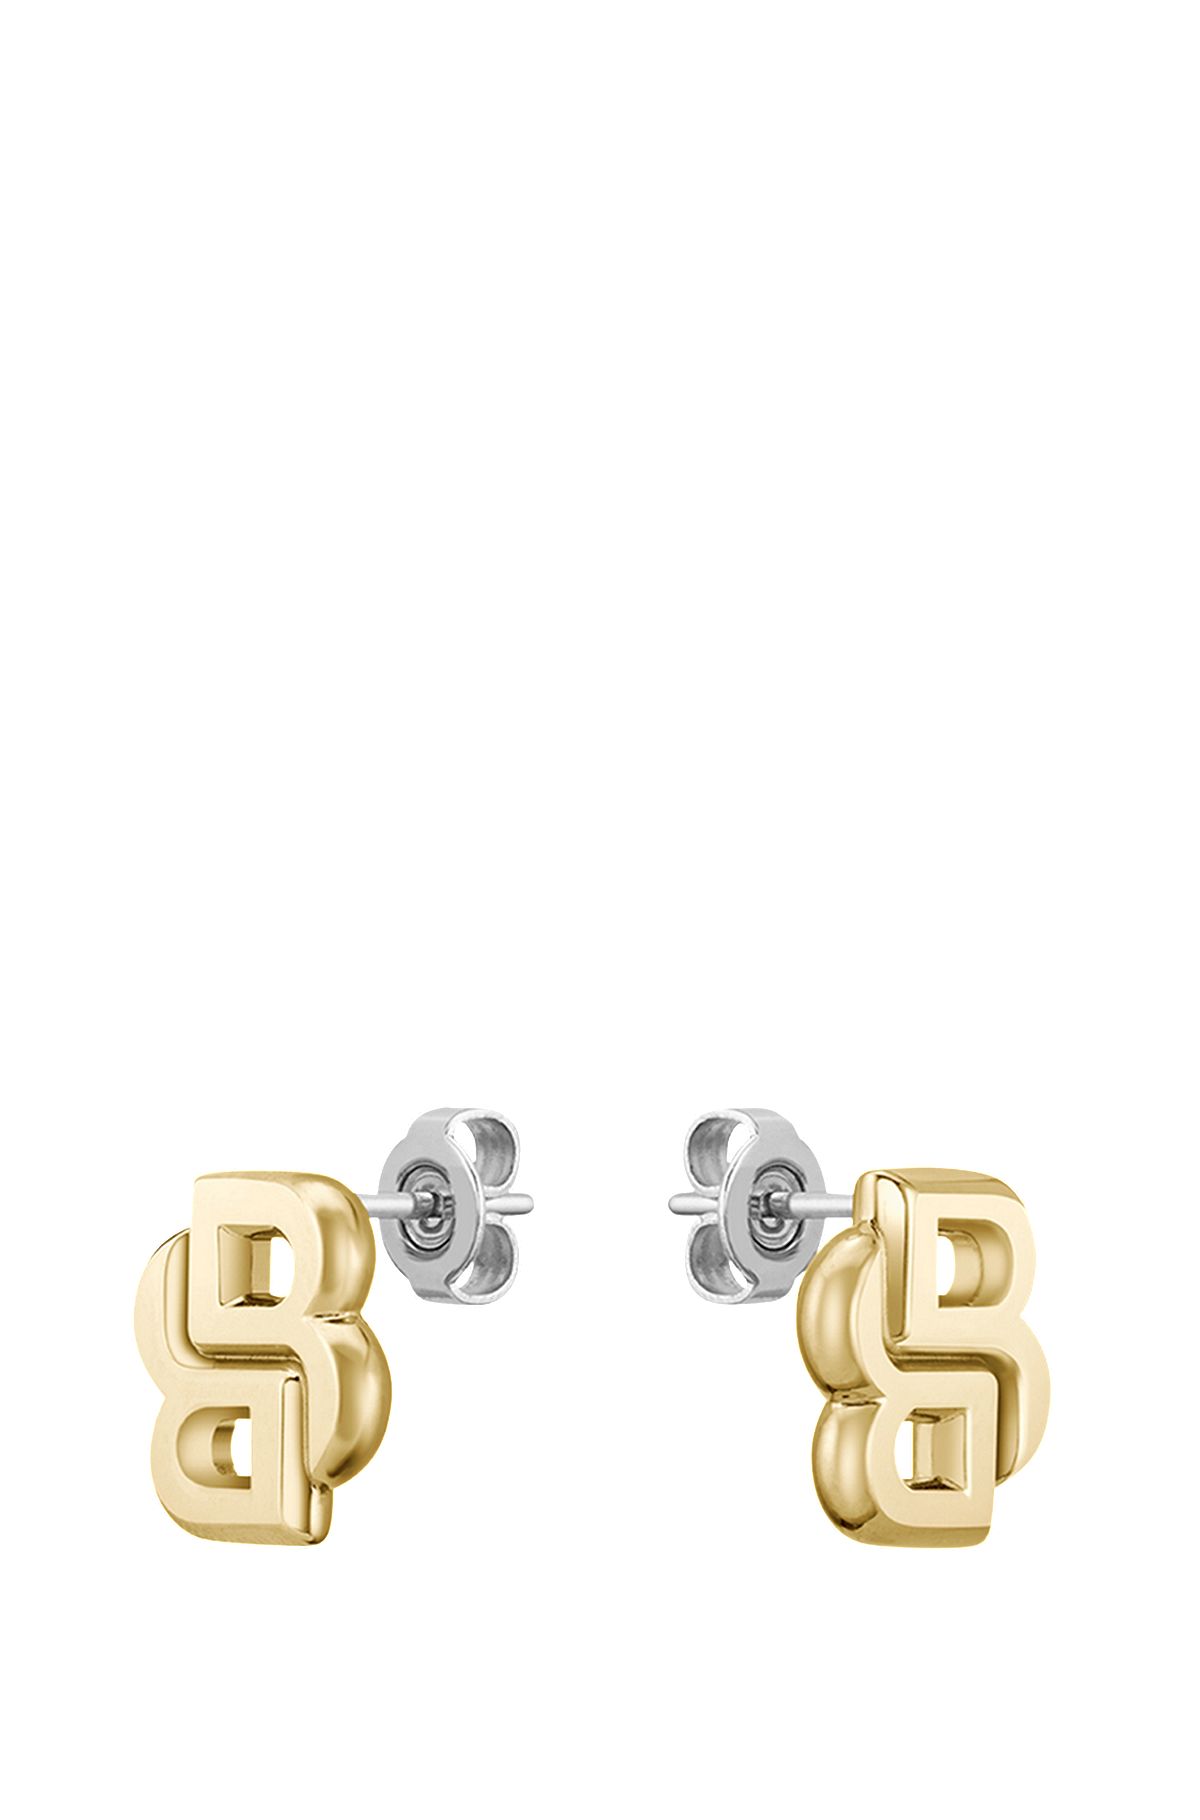 Goldfarbene Ohrringe mit Double-B-Monogramm, Gold